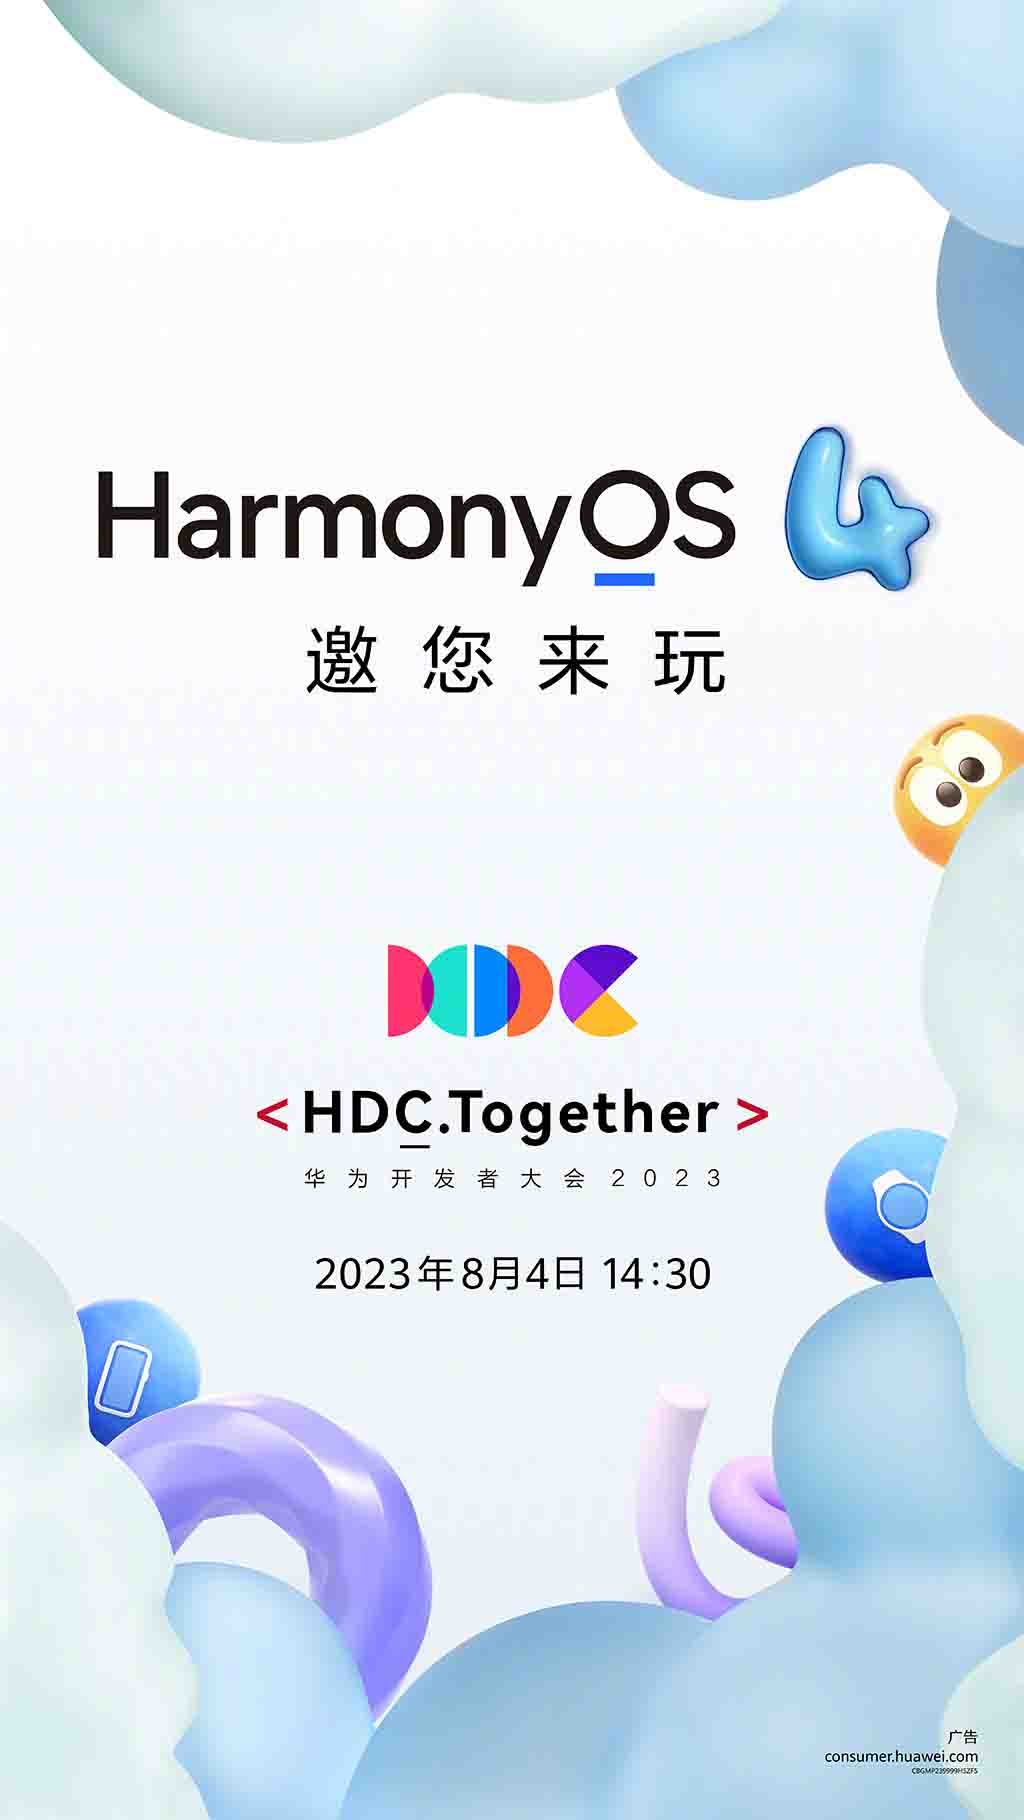 HarmonyOS 4 confirmed